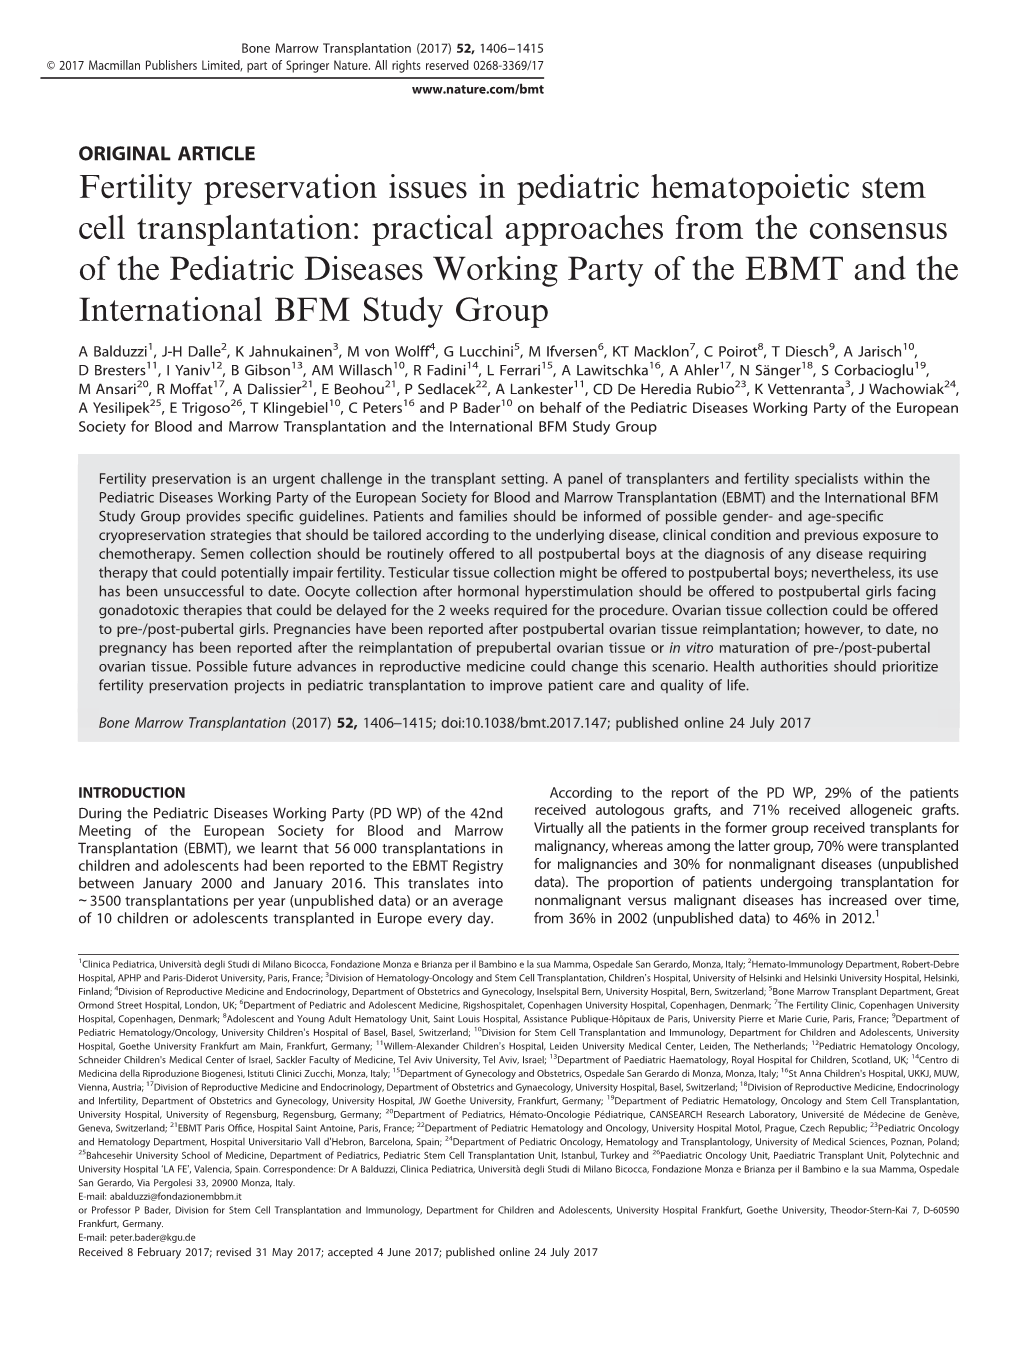 Fertility Preservation Issues in Pediatric Hematopoietic Stem